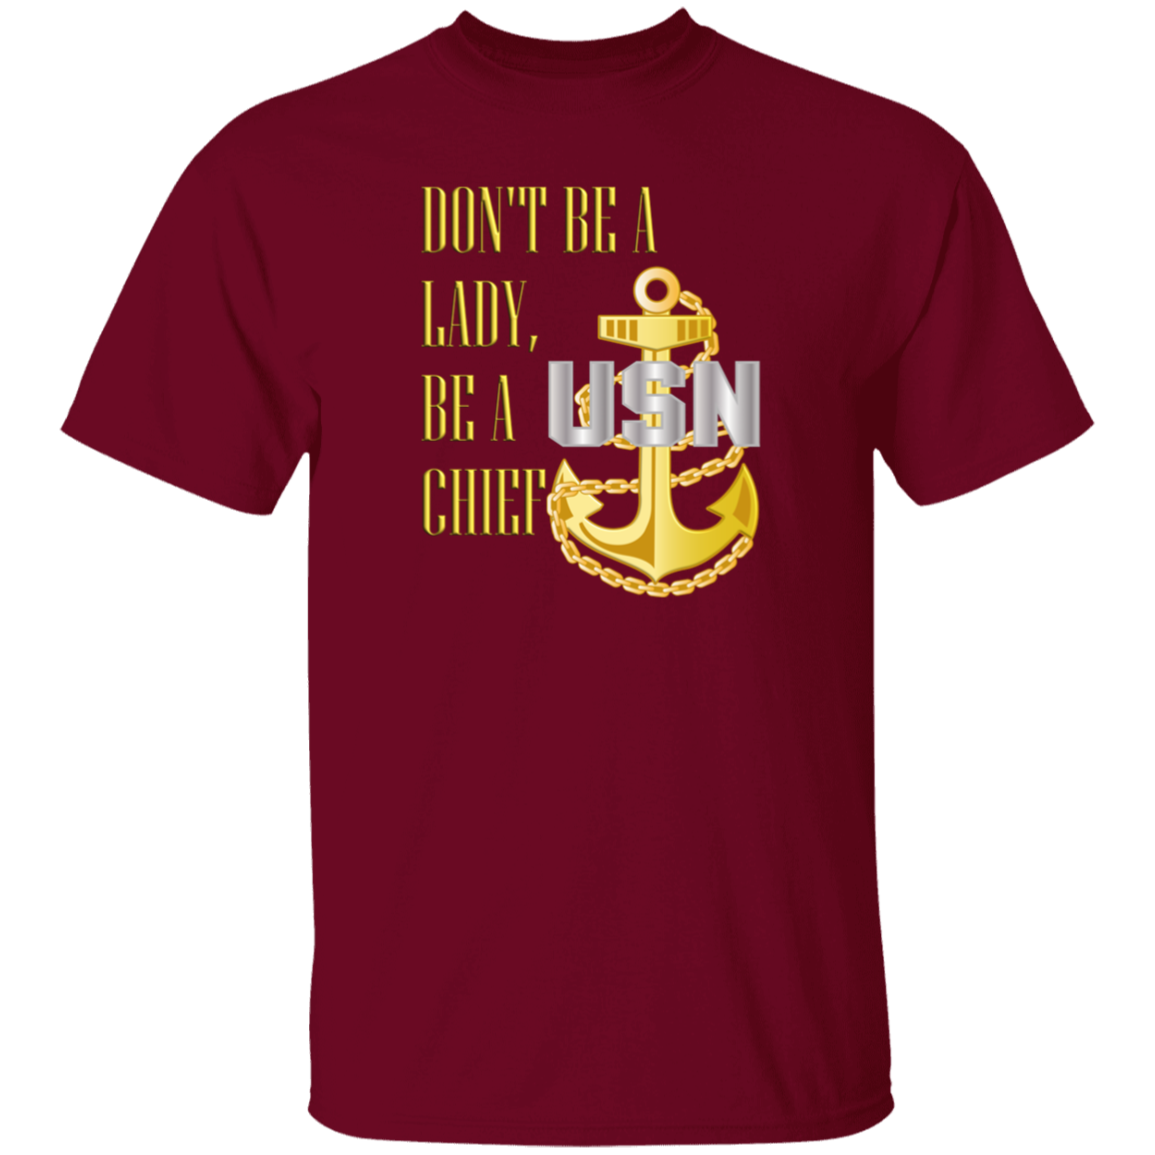 Be A Chief 5.3 oz. T-Shirt